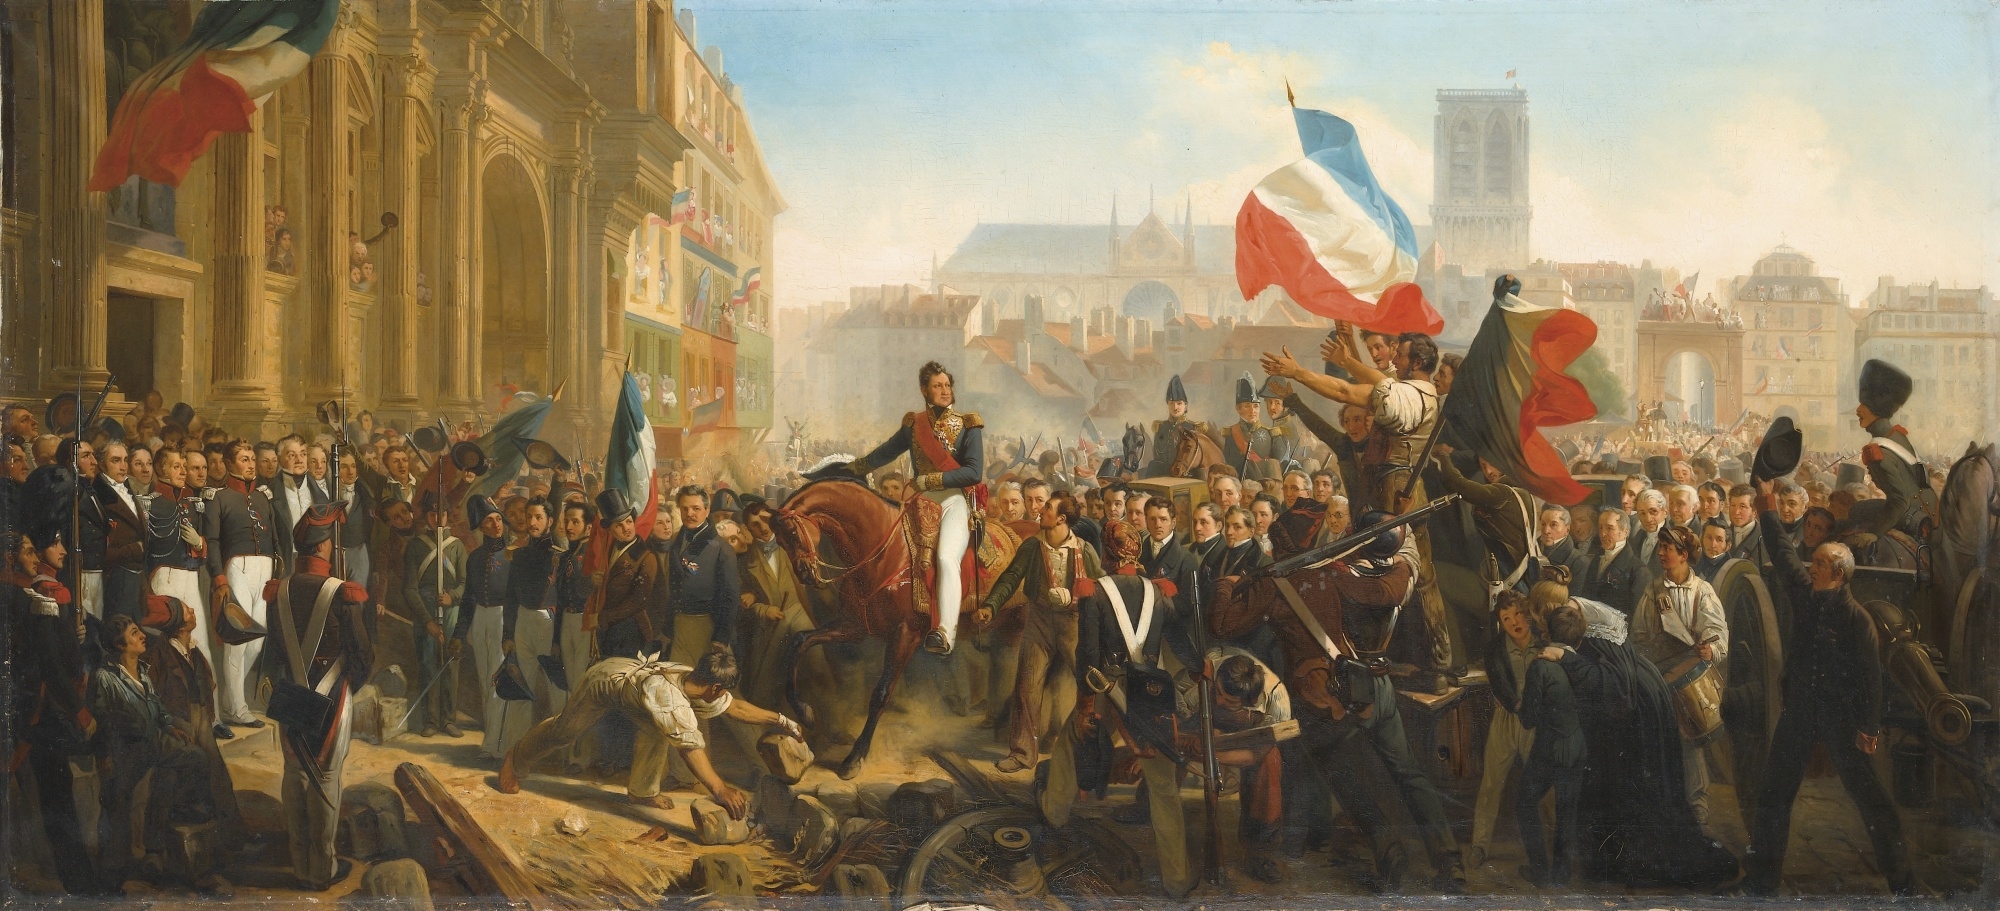 Революции в европе xix в. 1830 Июльская революция 1830 -1848 Июльская монархия. Июльская революция 1830 года.